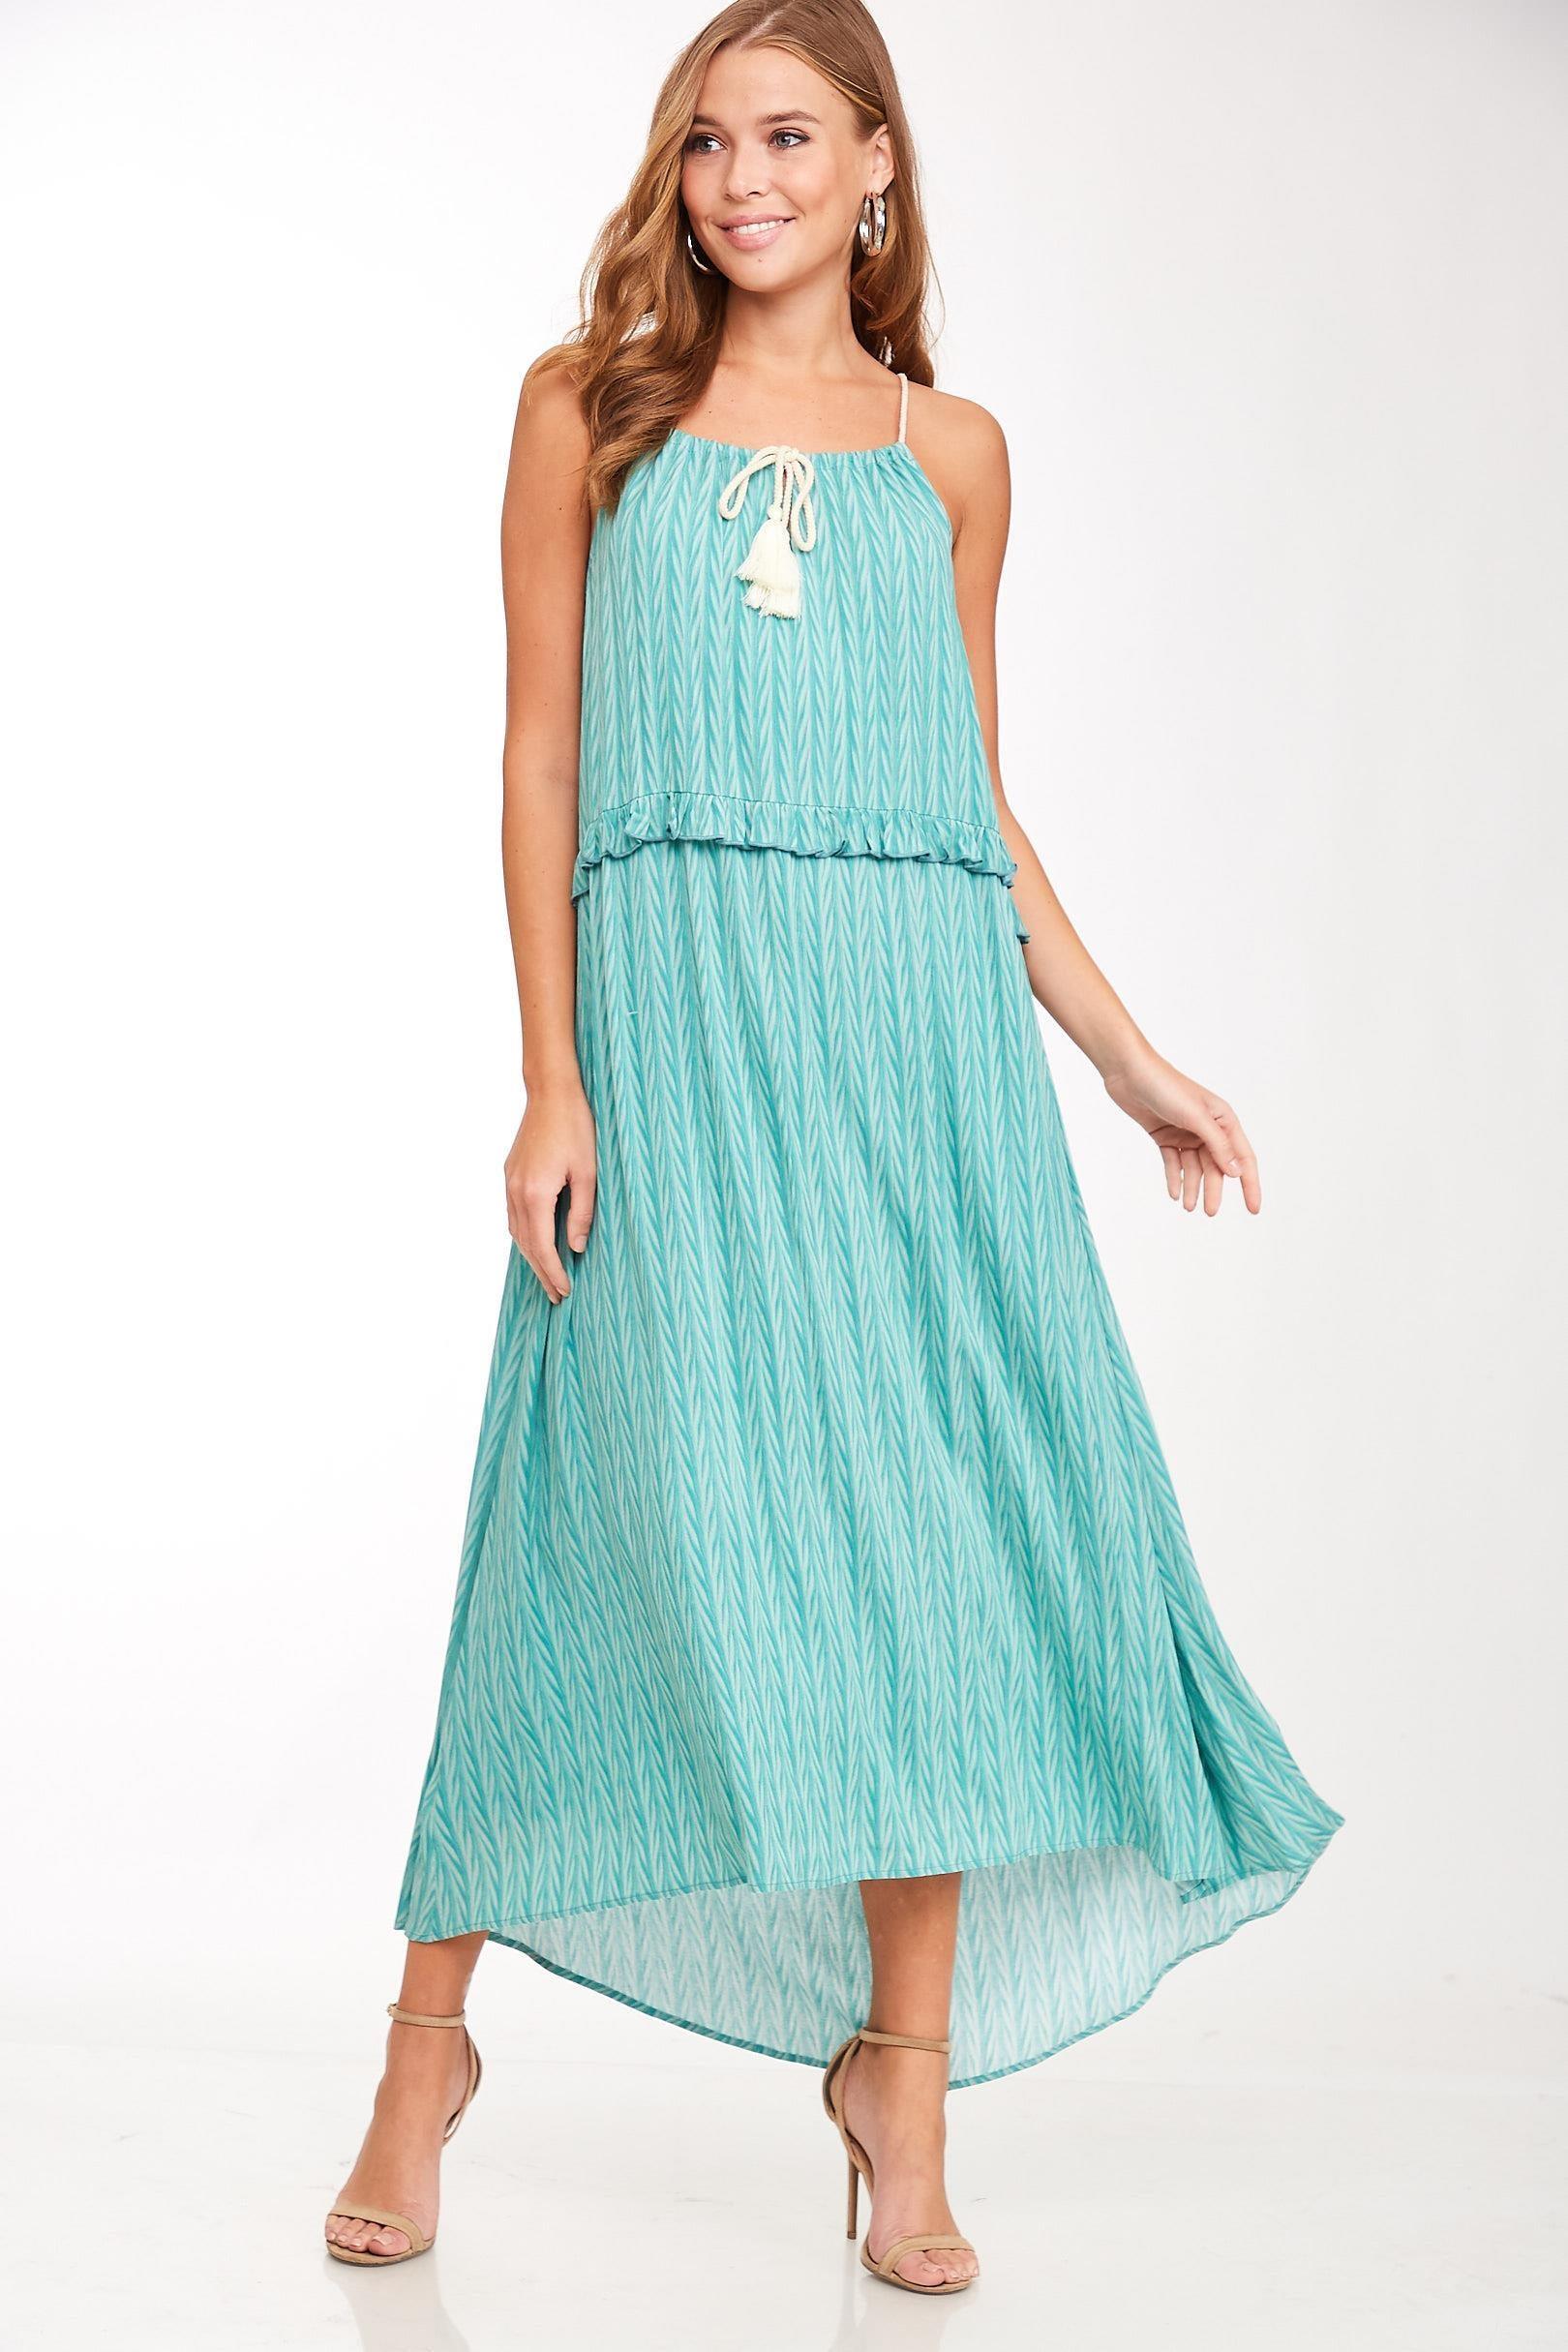 tassel tie chevron maxi dress-Dress-L Love-Turquoise-LV2577-1-RK Collections Boutique